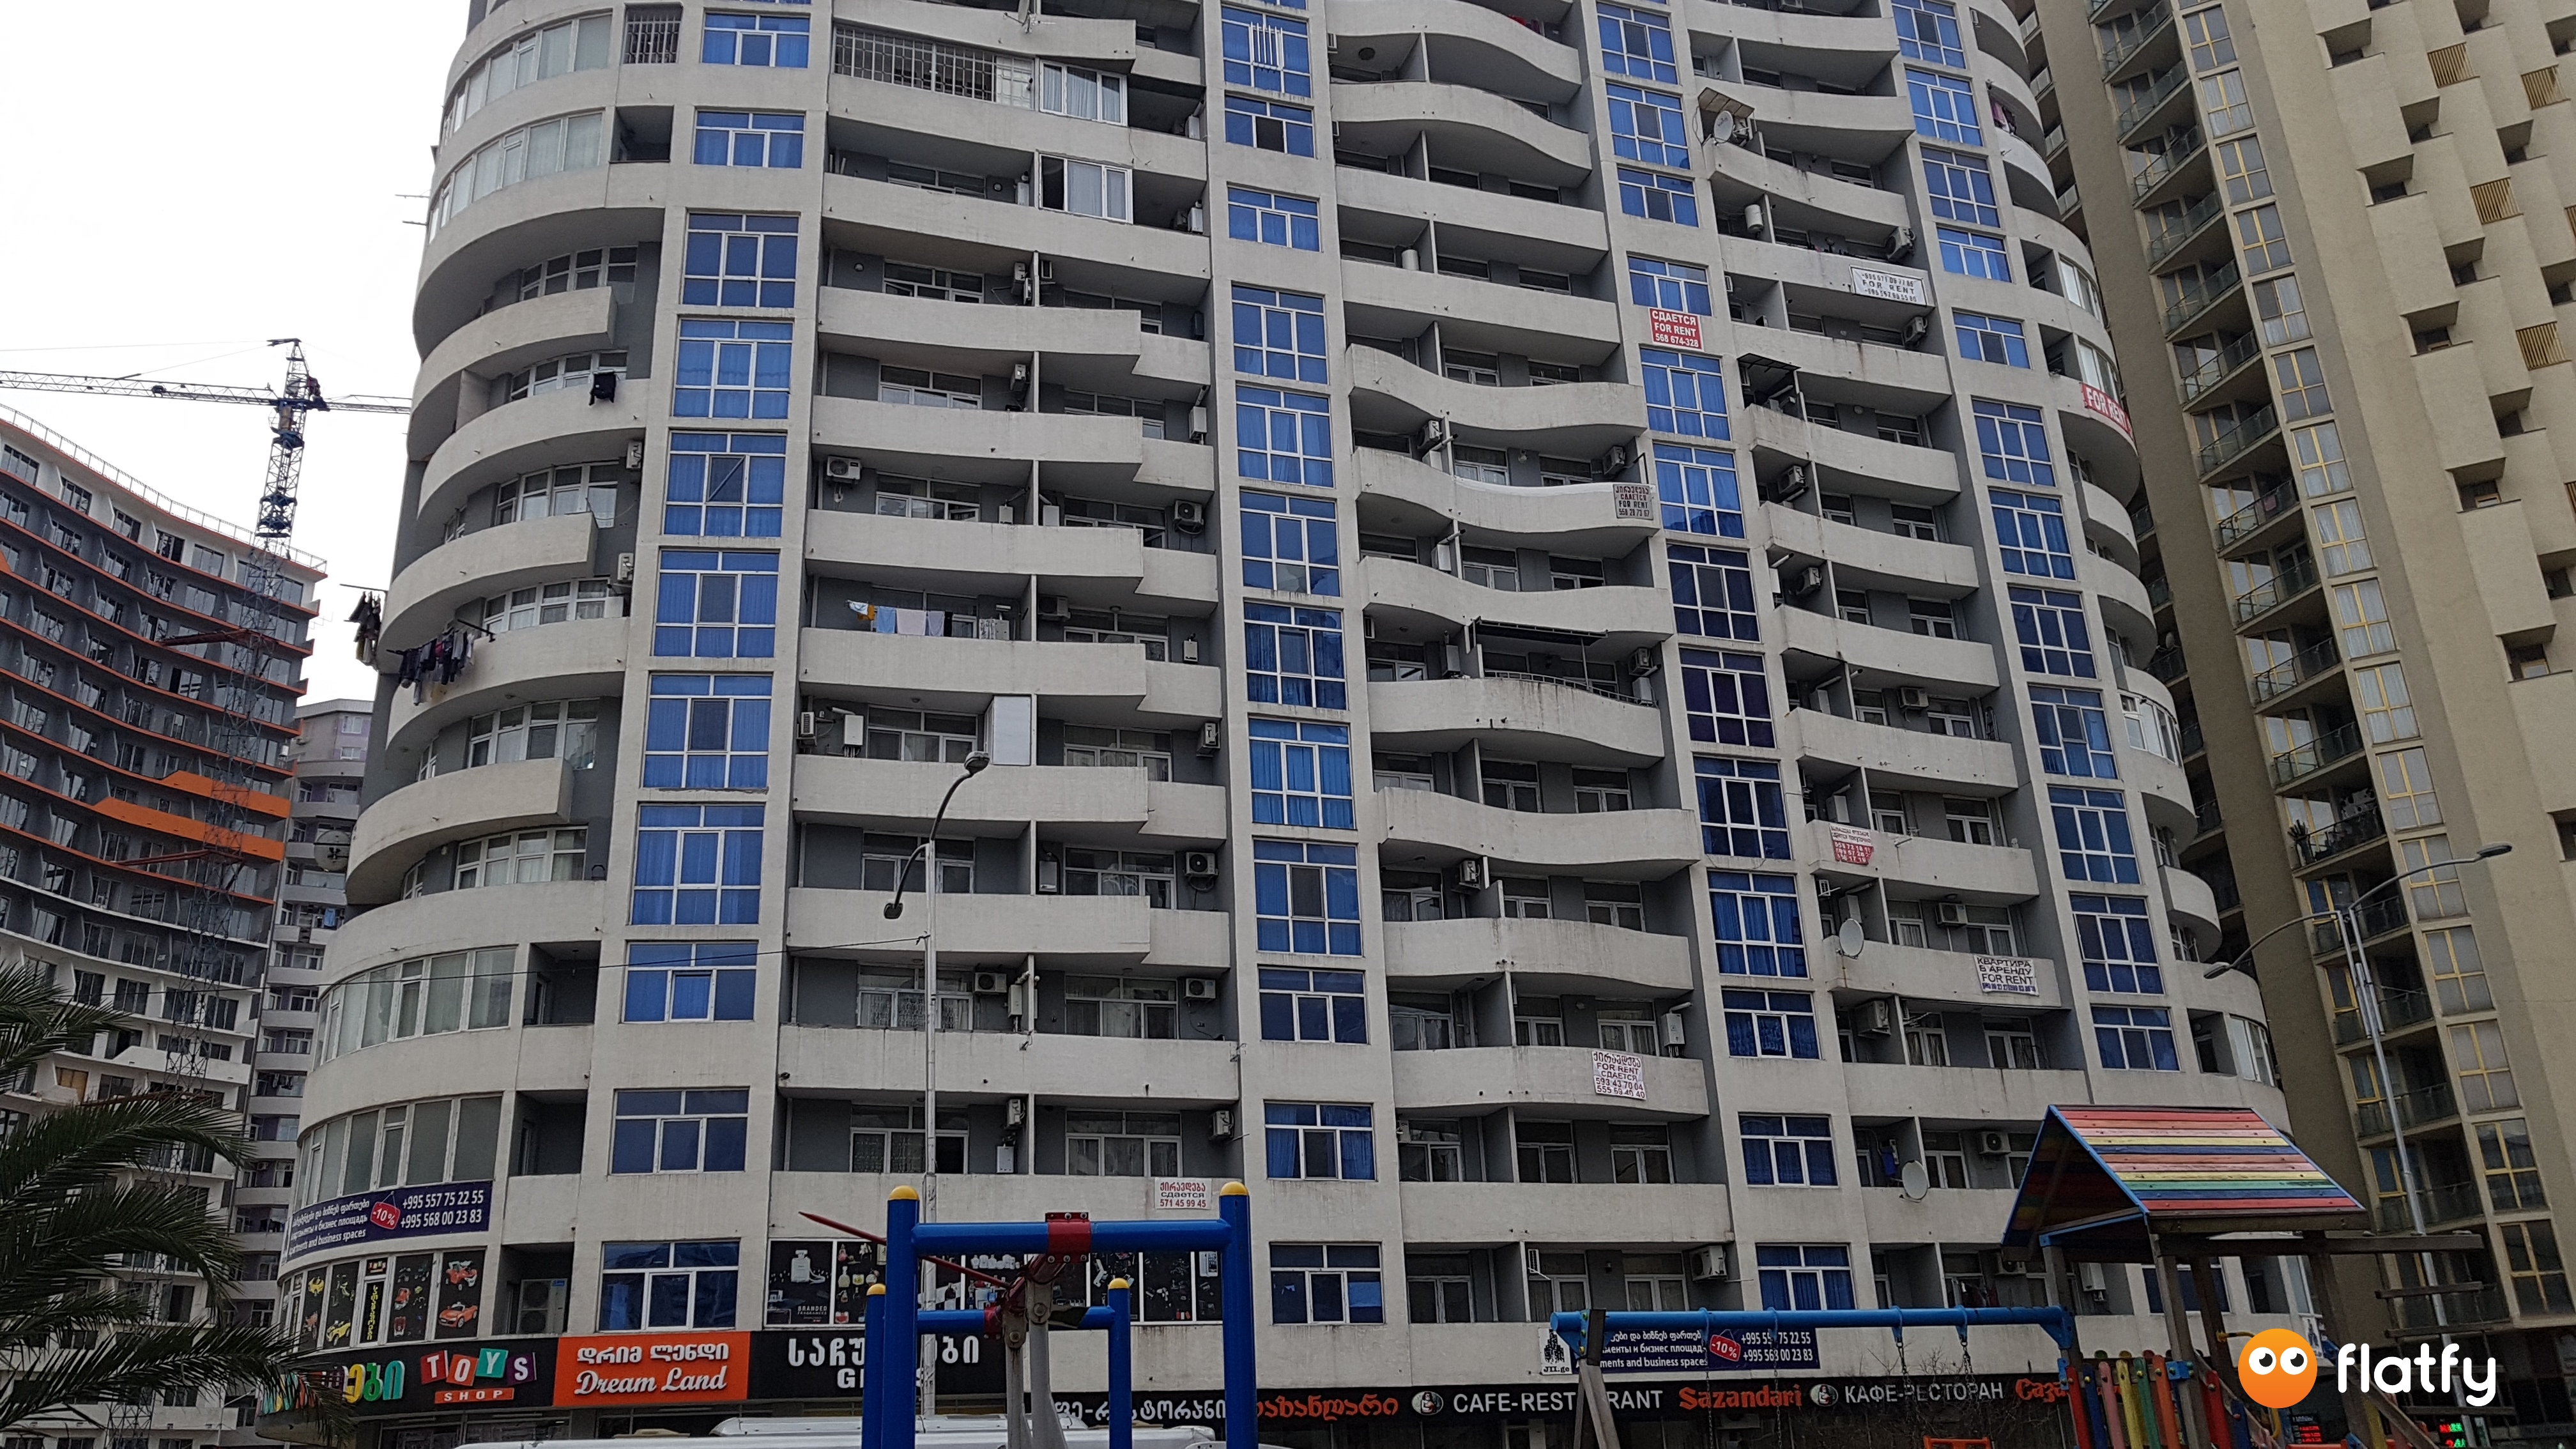 Construction progress House on Kobaladze 8a - Angle 3, March 2019